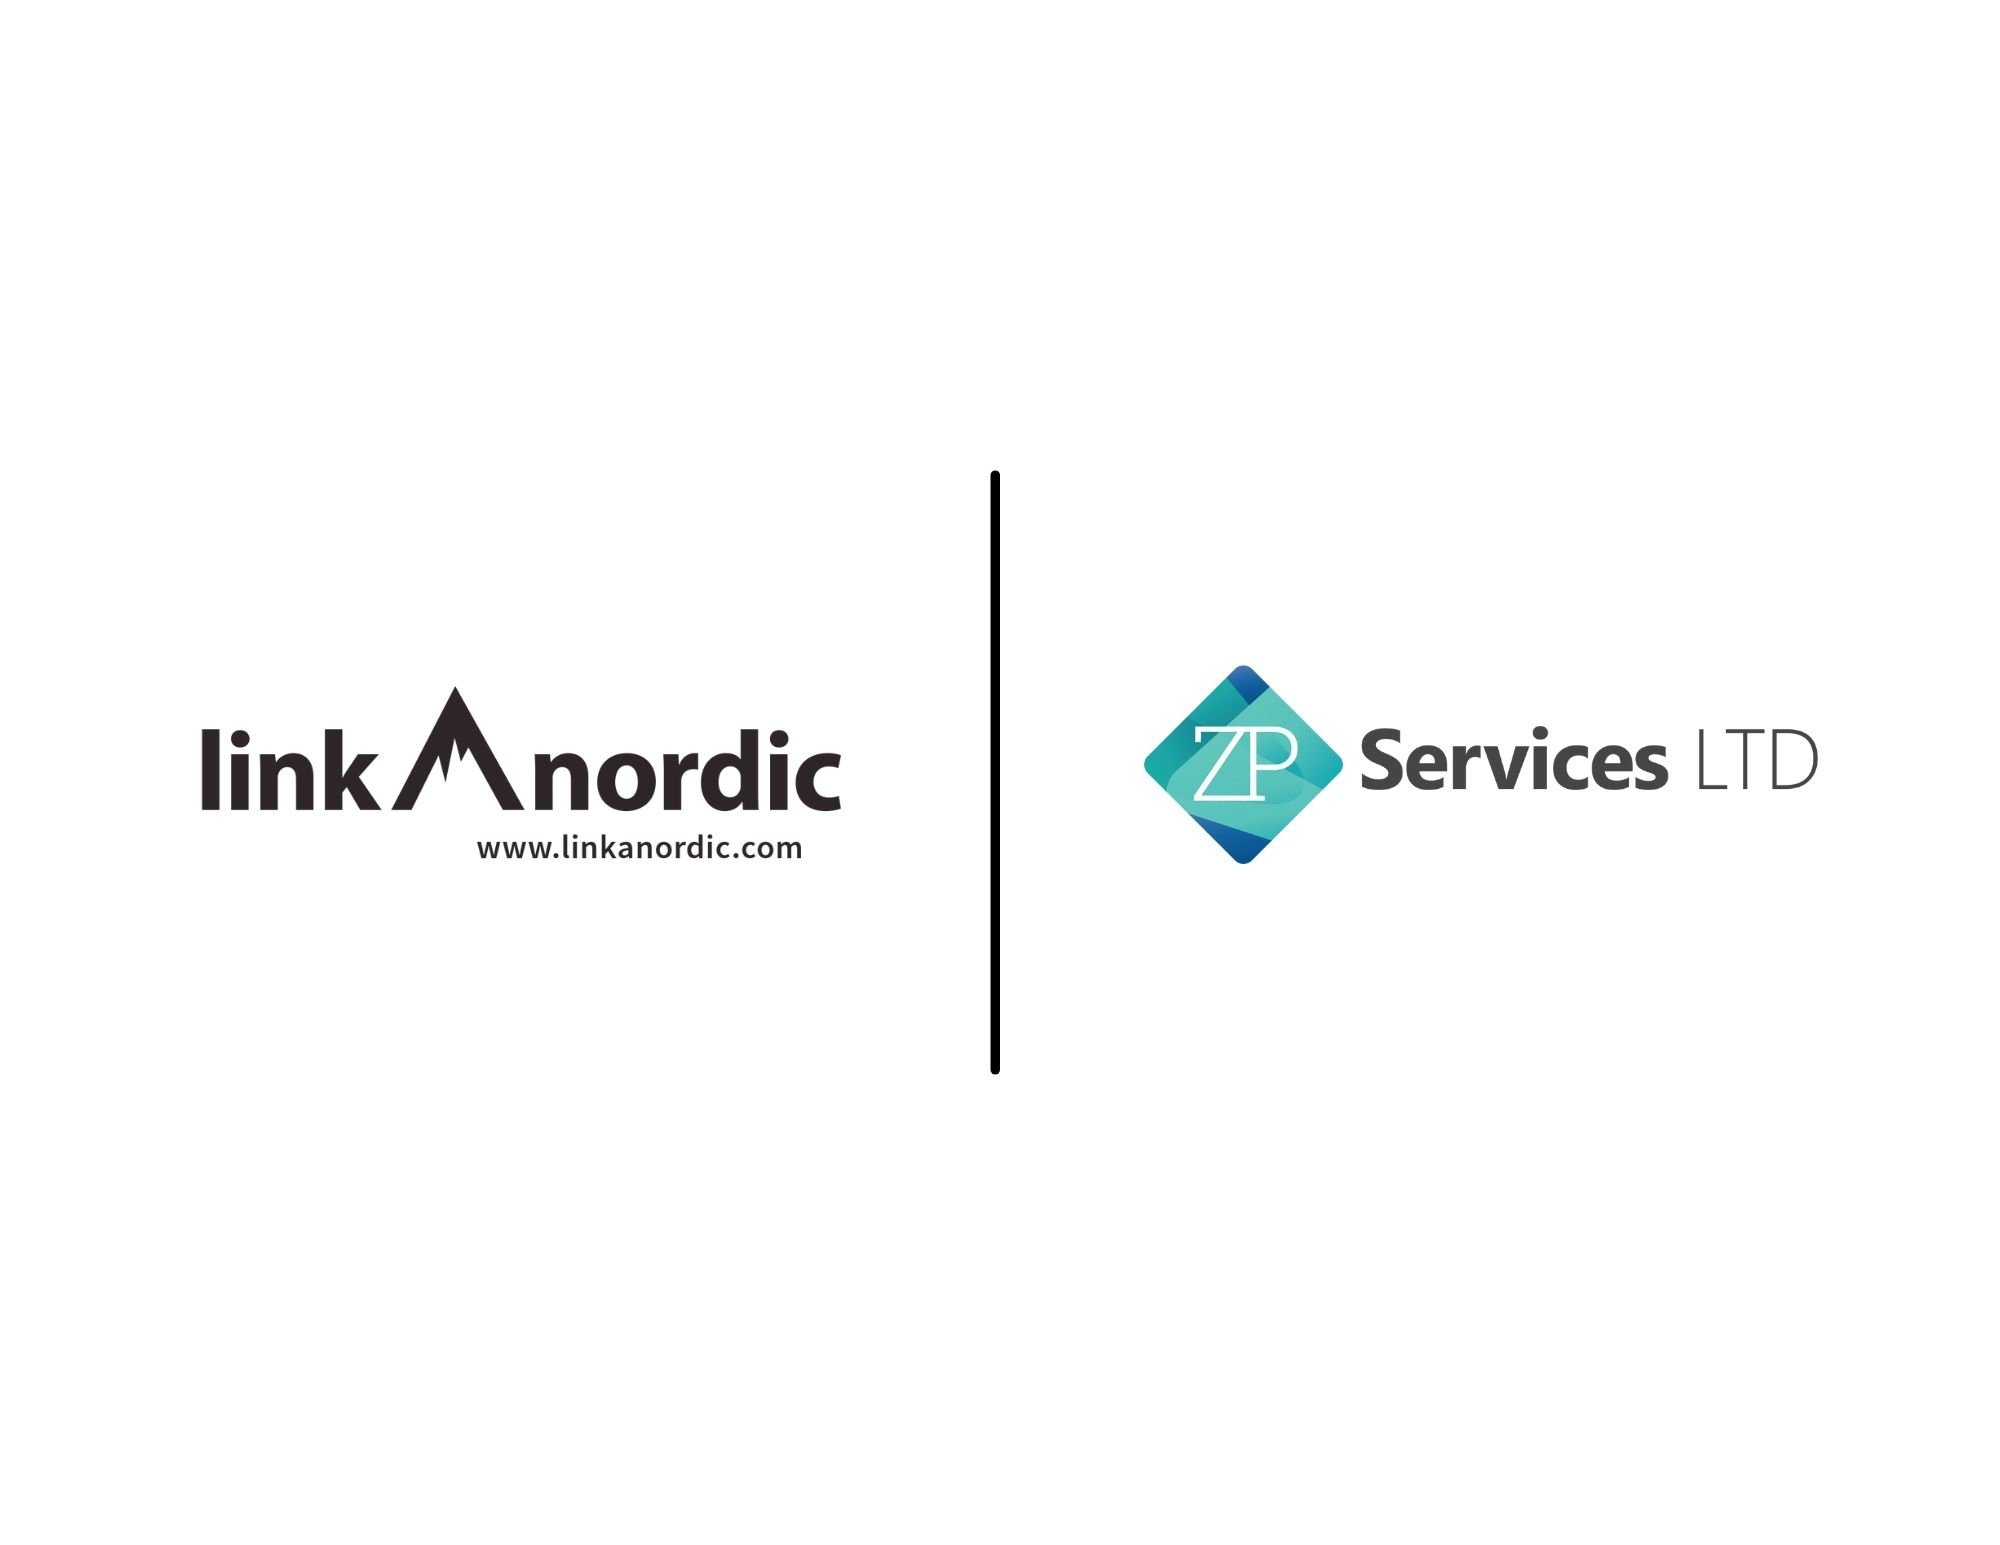 linkAnordic x ZP Services LTD logo